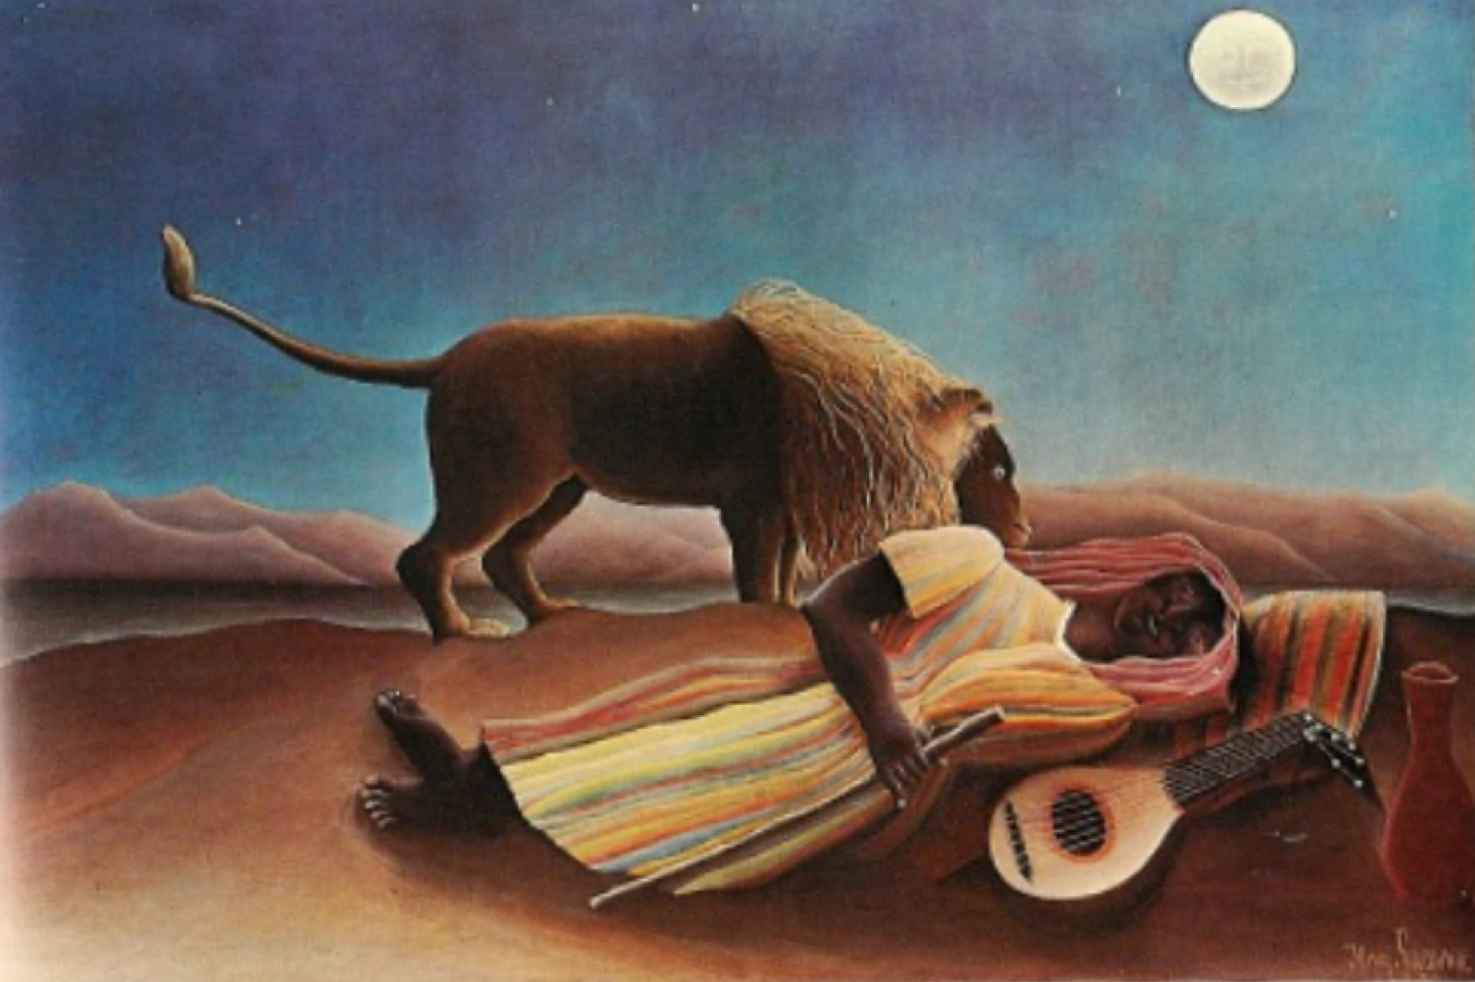 Sleeping Gypsy example of art as story